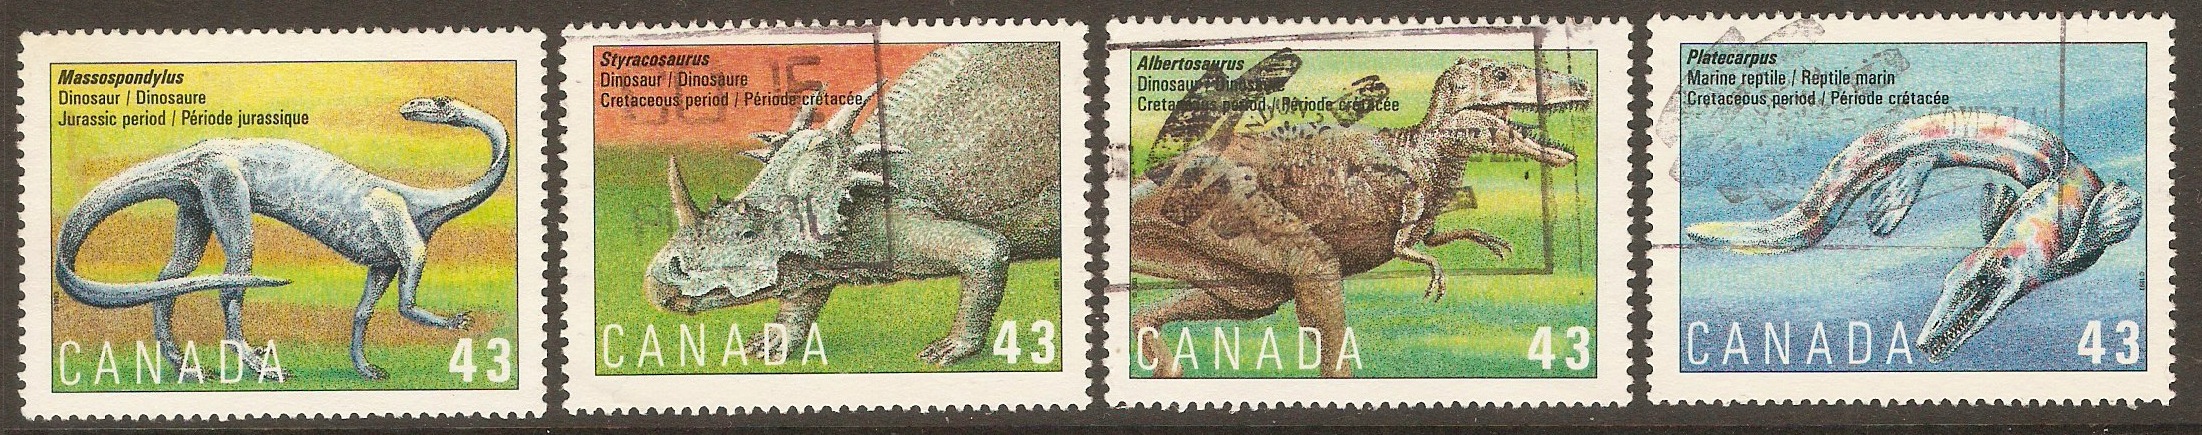 Canada 1993 Prehistoric Canada set. SG1568-SG1571.